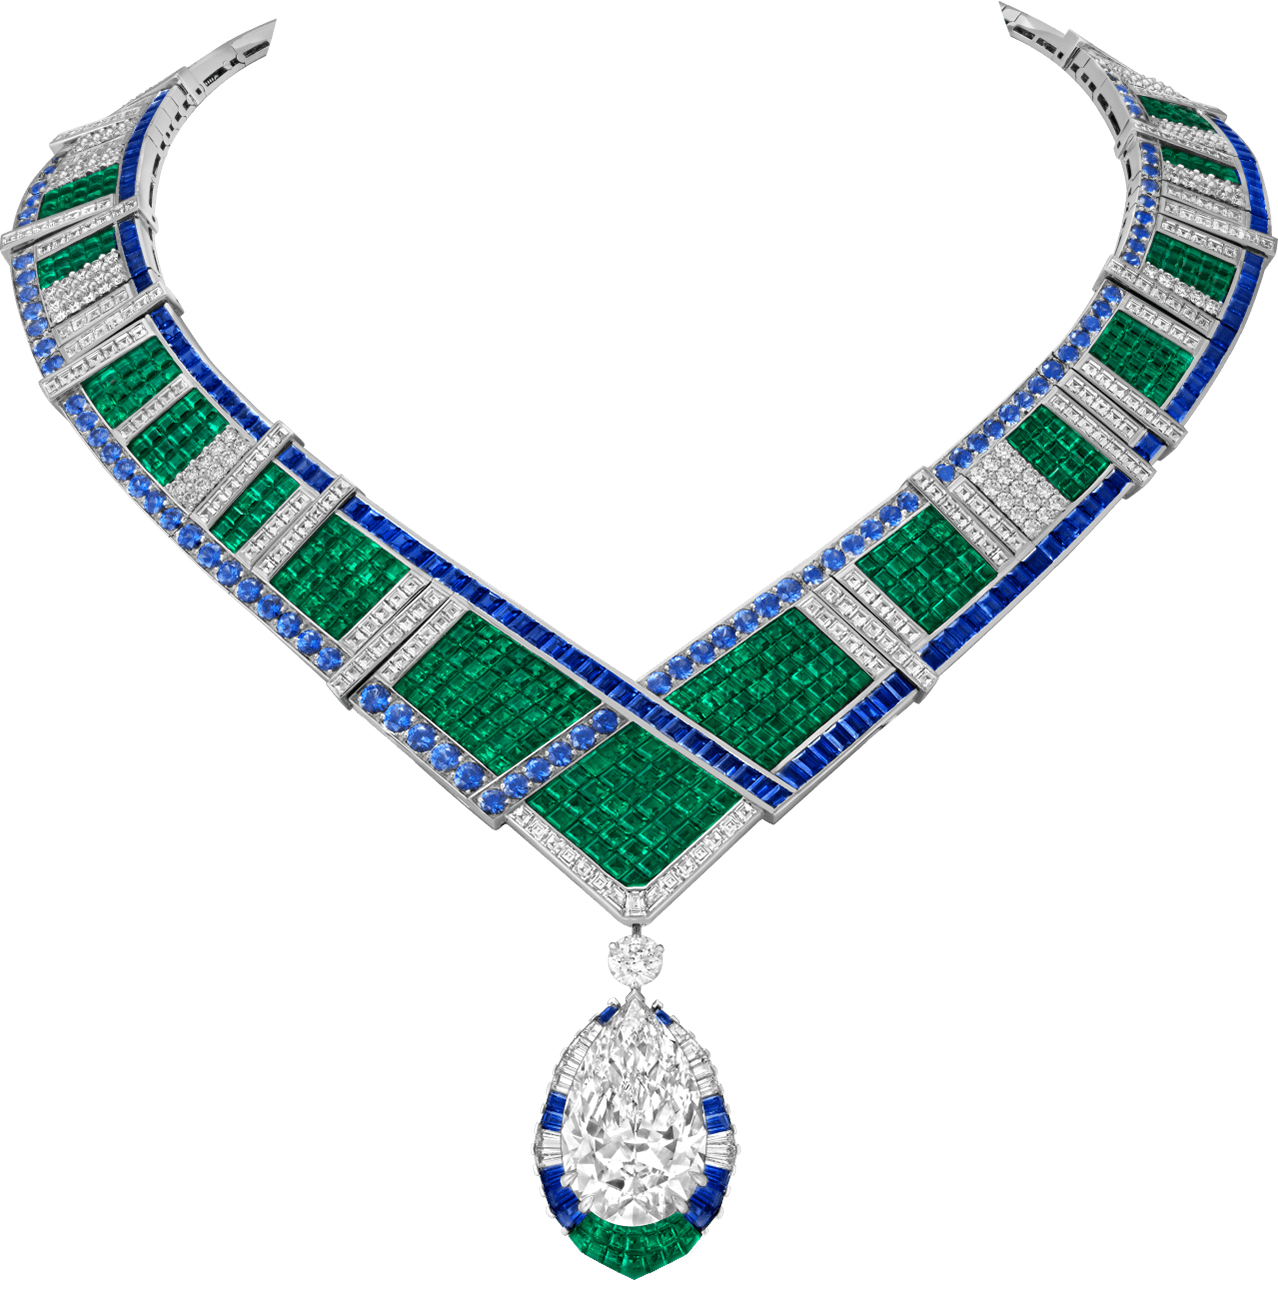 Chevron Mysterieux necklace with detachable pendants, van clef and carpels, edge mag